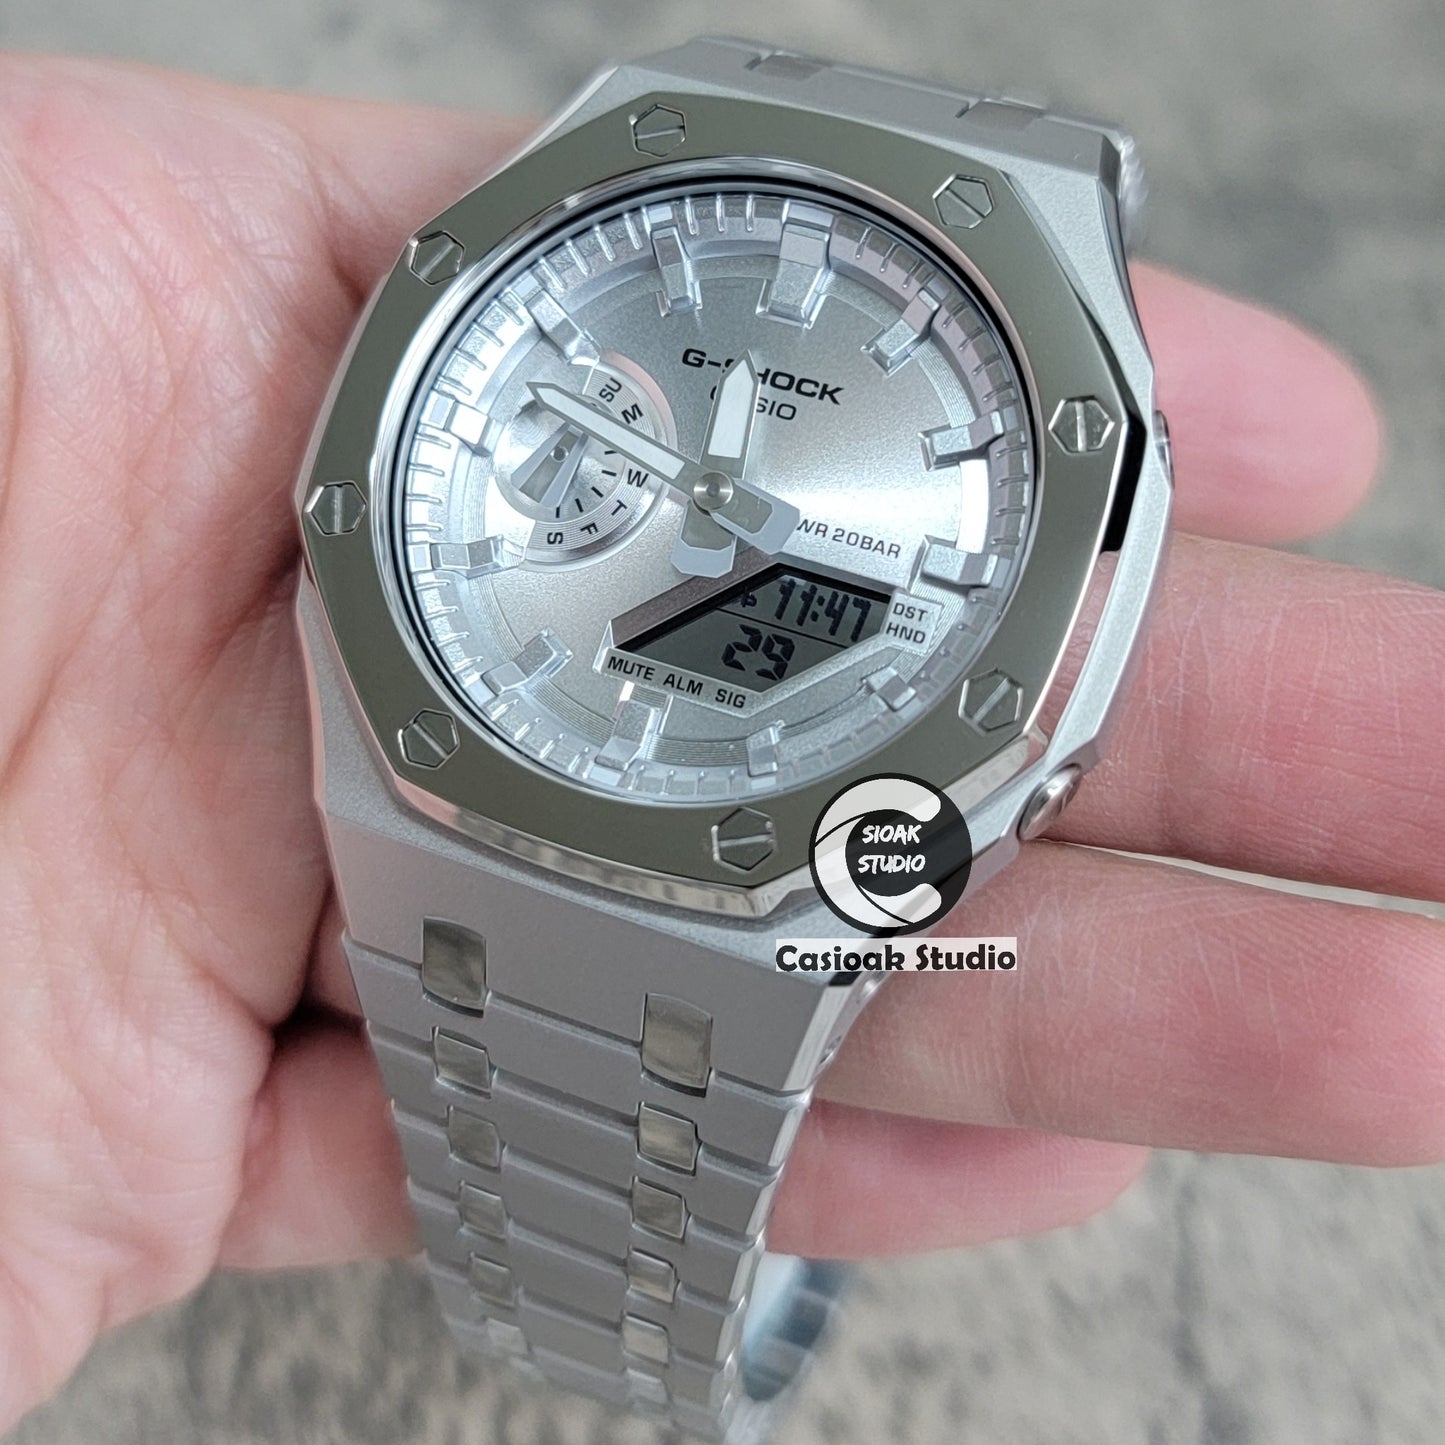 Casioak Mod Watch Polished Silver Case Metal Strap Silver Time Mark Silver Dial 44mm - Casioak Studio